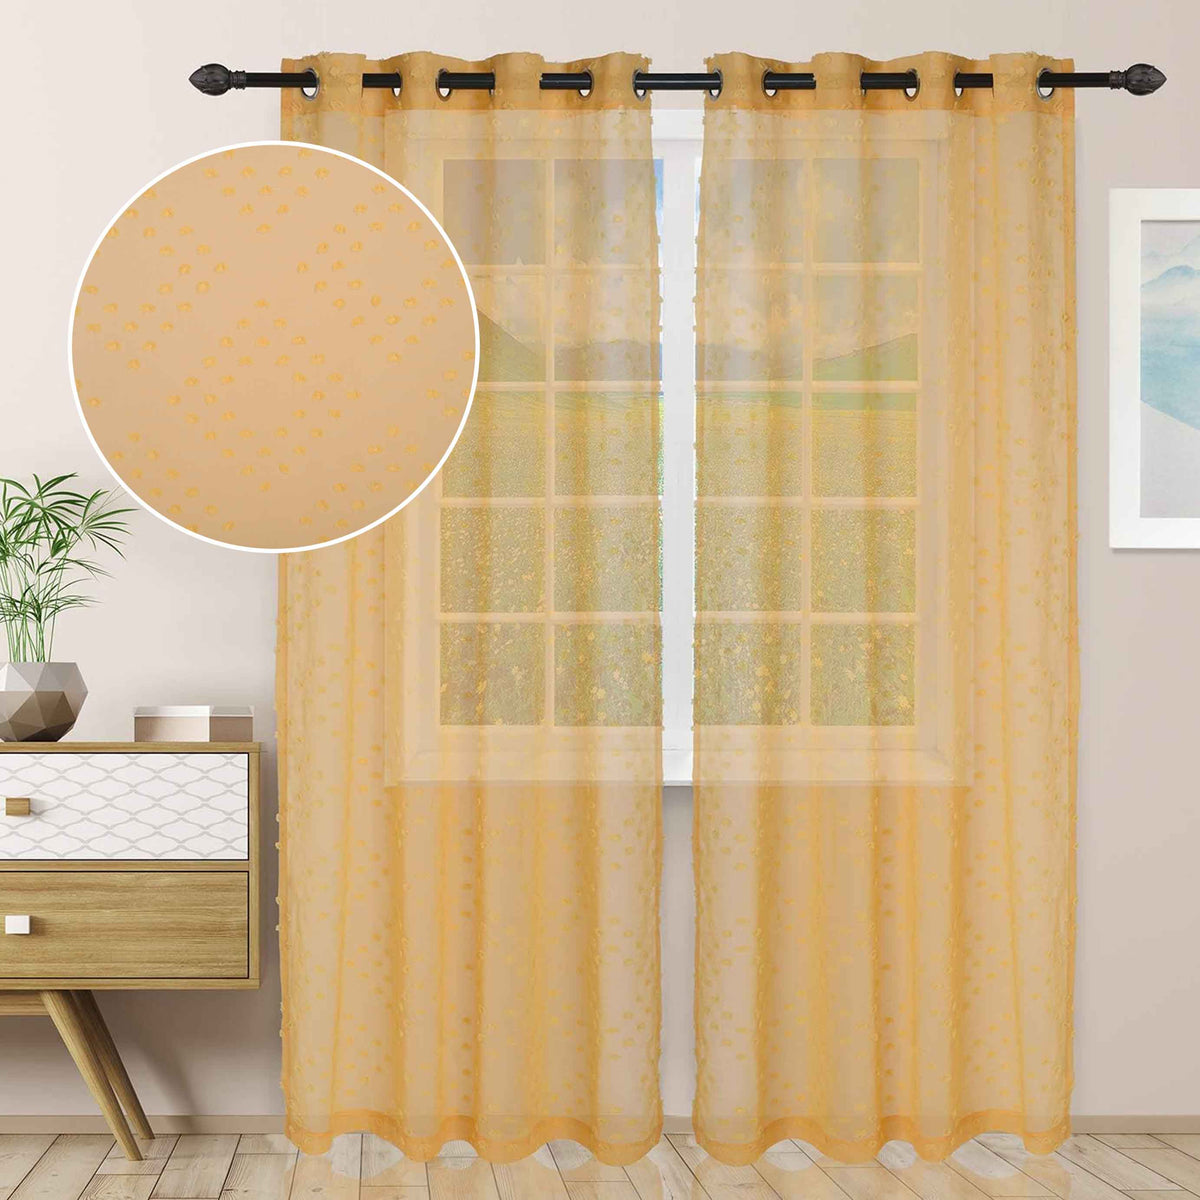  Sheer Poppy Floral Modern Textured Grommet Curtain Panels Set of 2 - LemonDrop